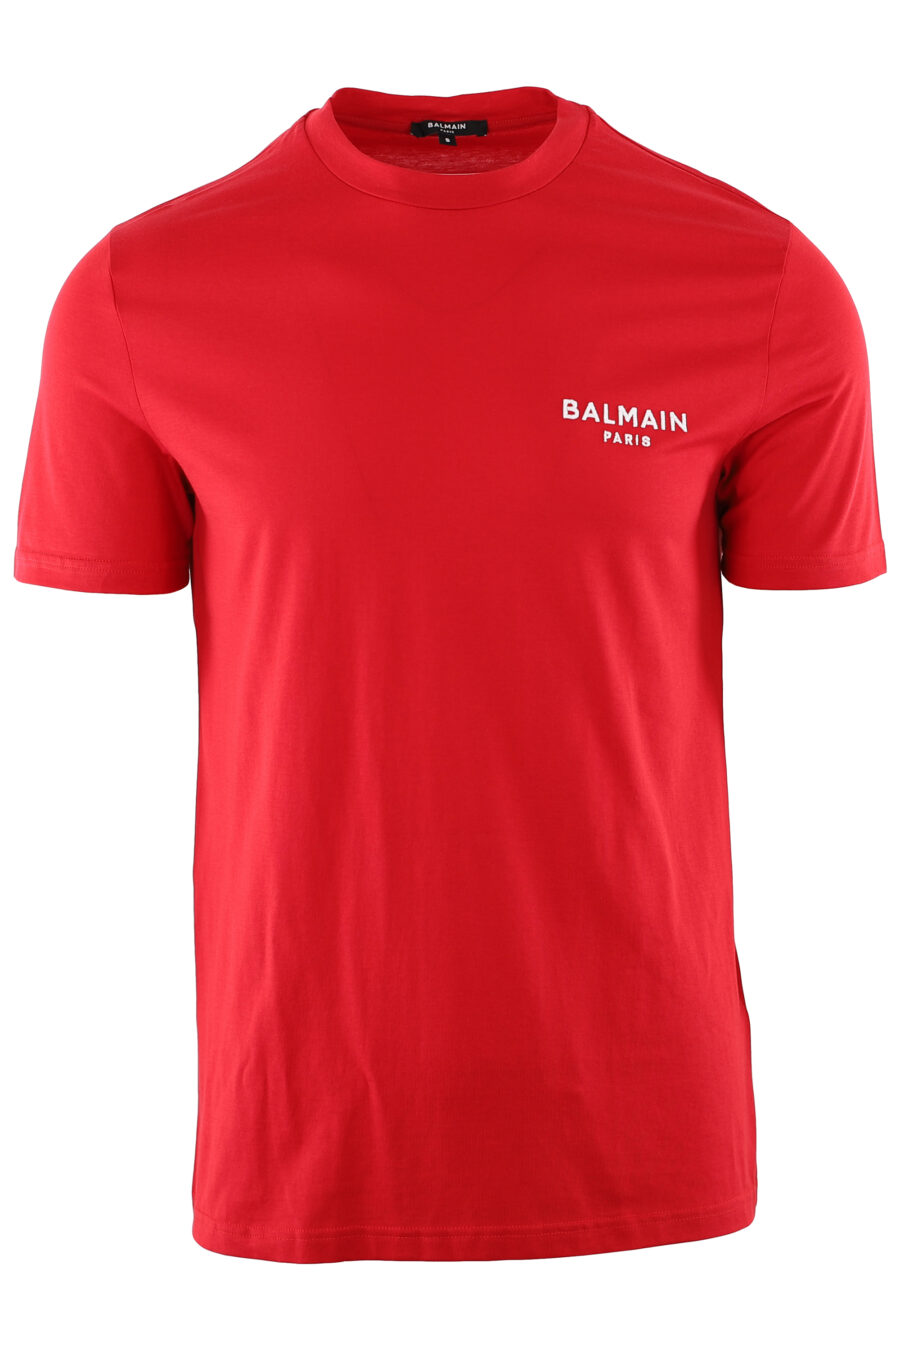 Camiseta roja con logo blanco bordado - IMG 7409